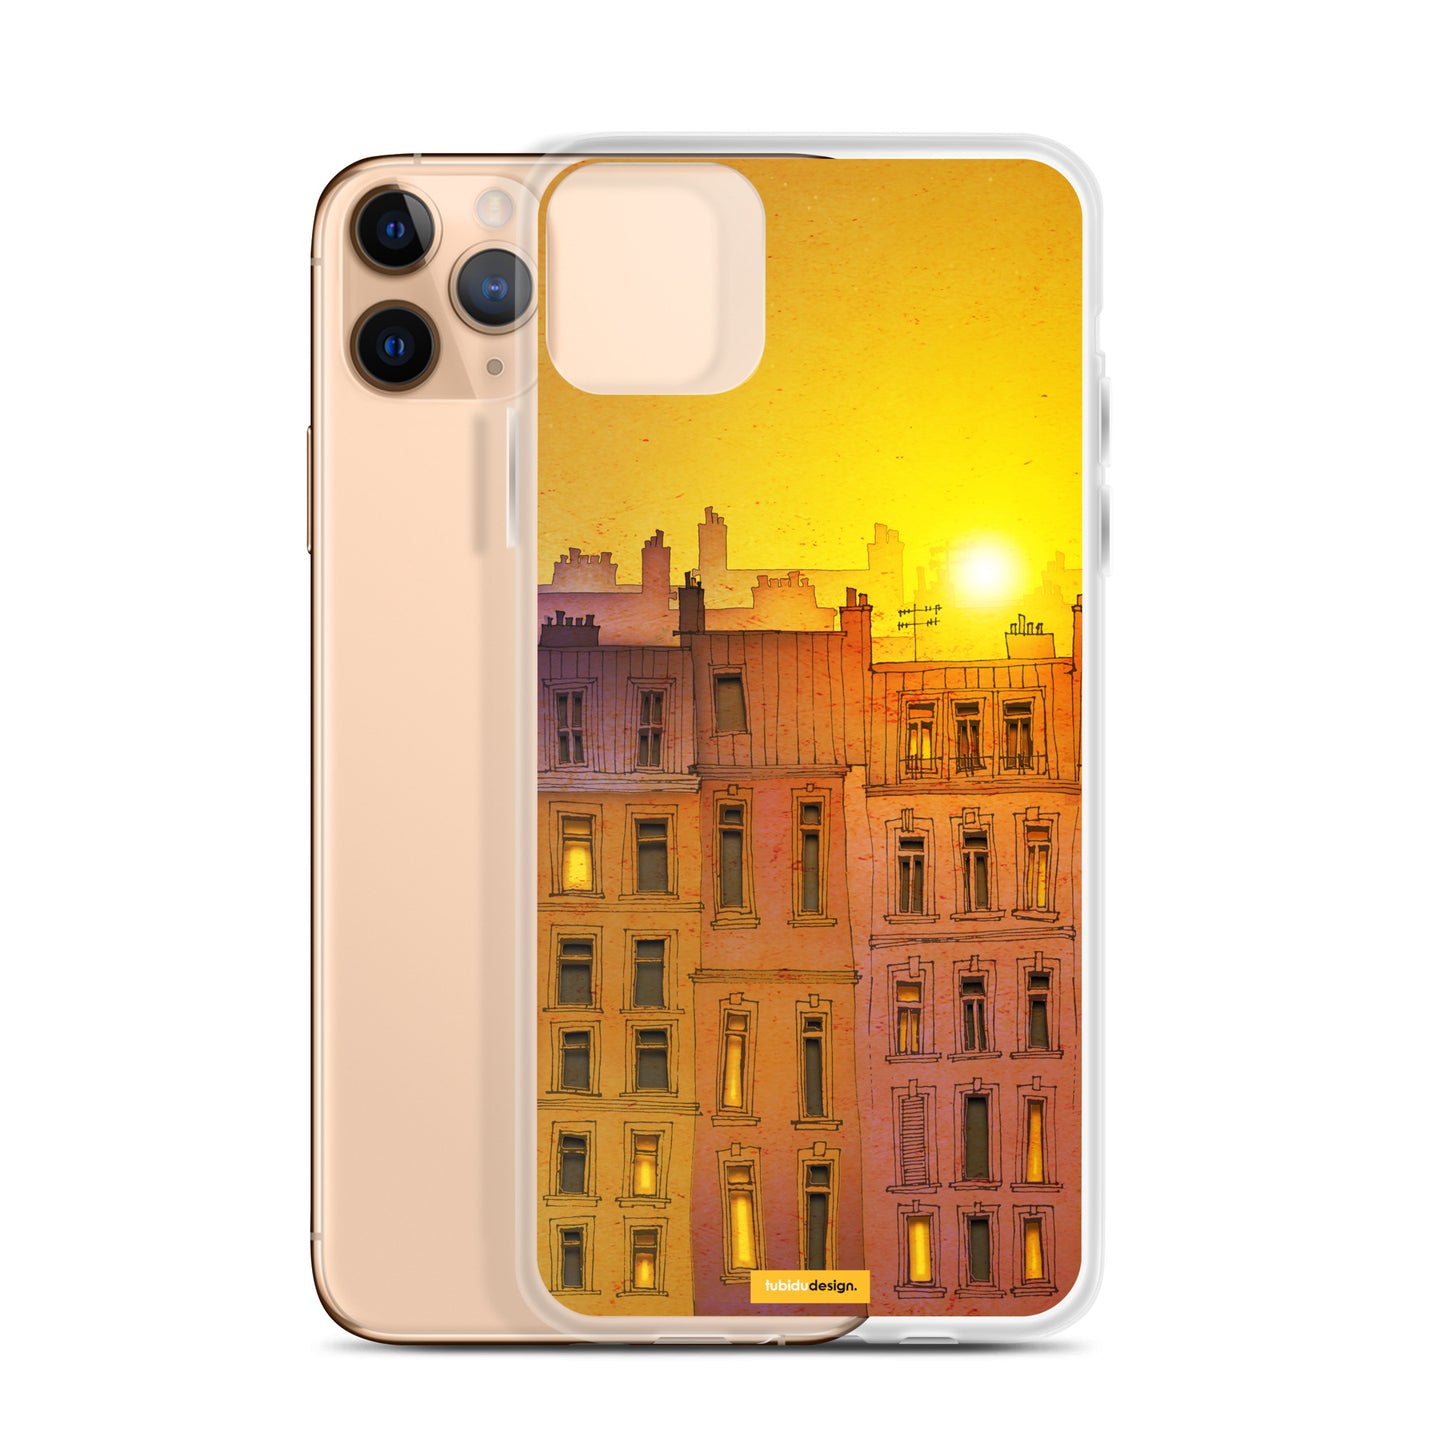 Sunrise - Illustrated iPhone Case